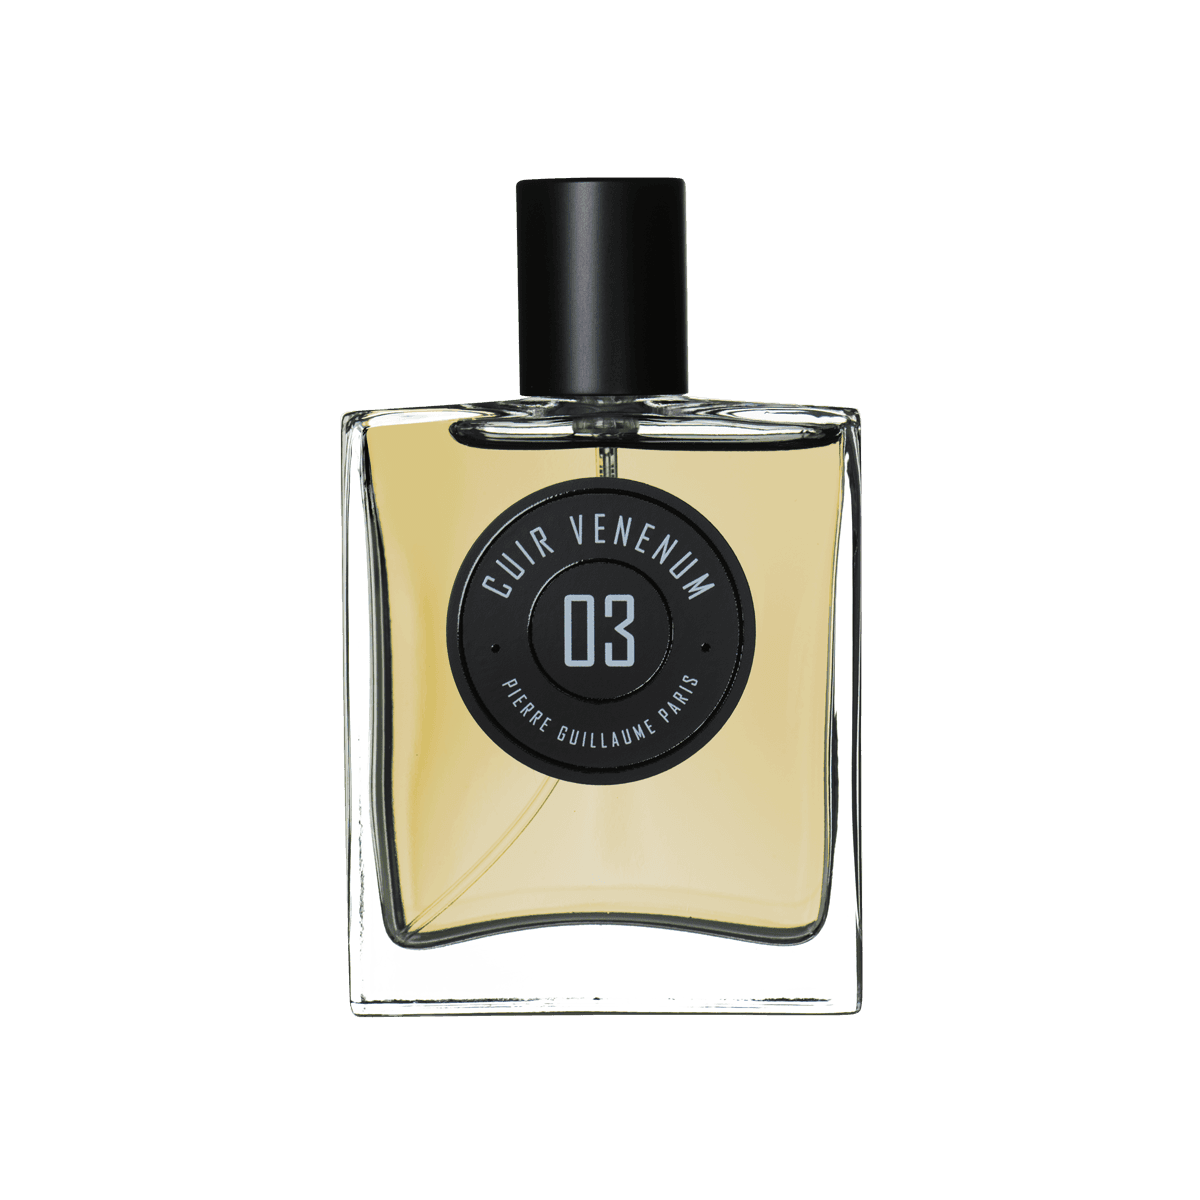 Pierre Guillaume - 03 Cuir Venenum 50 ml | Perfume Lounge